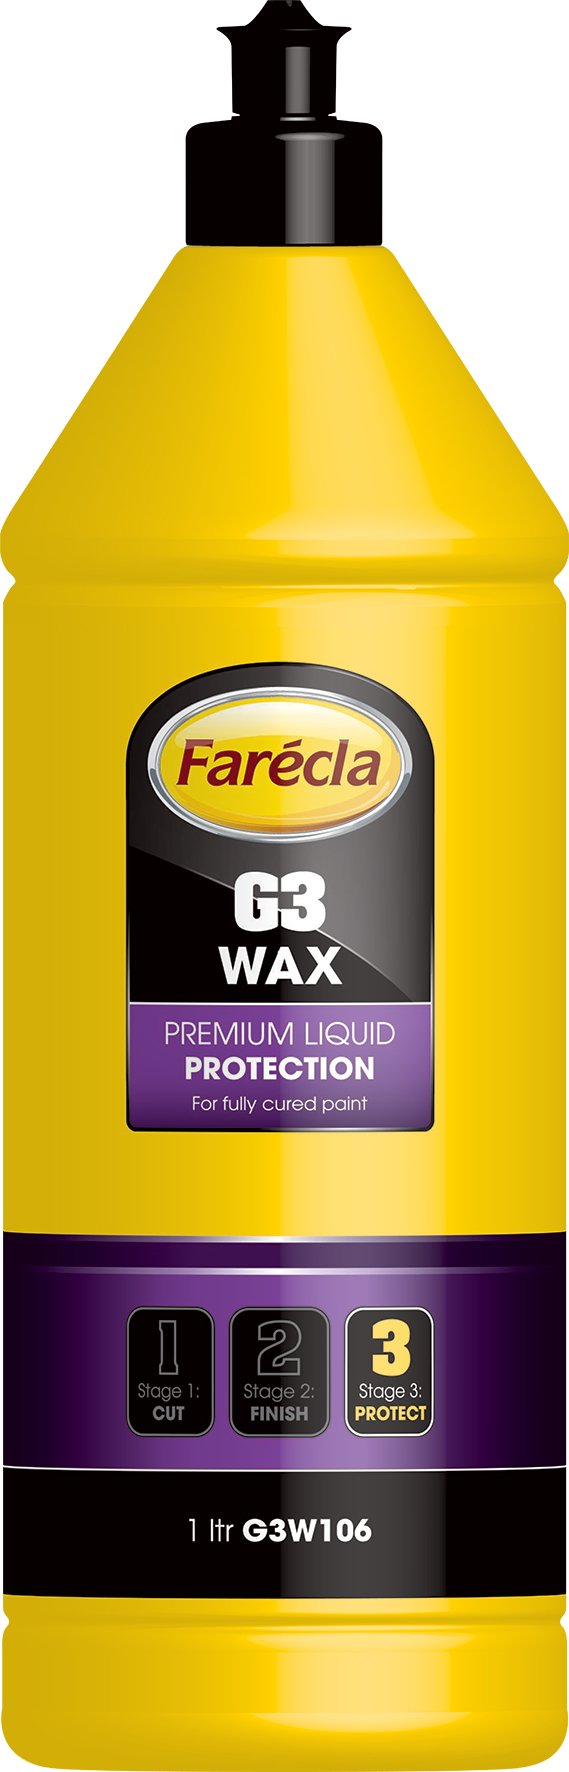 FARECLA G3 Wax Premium Liquid Protection 500ml, Beige von Farecla